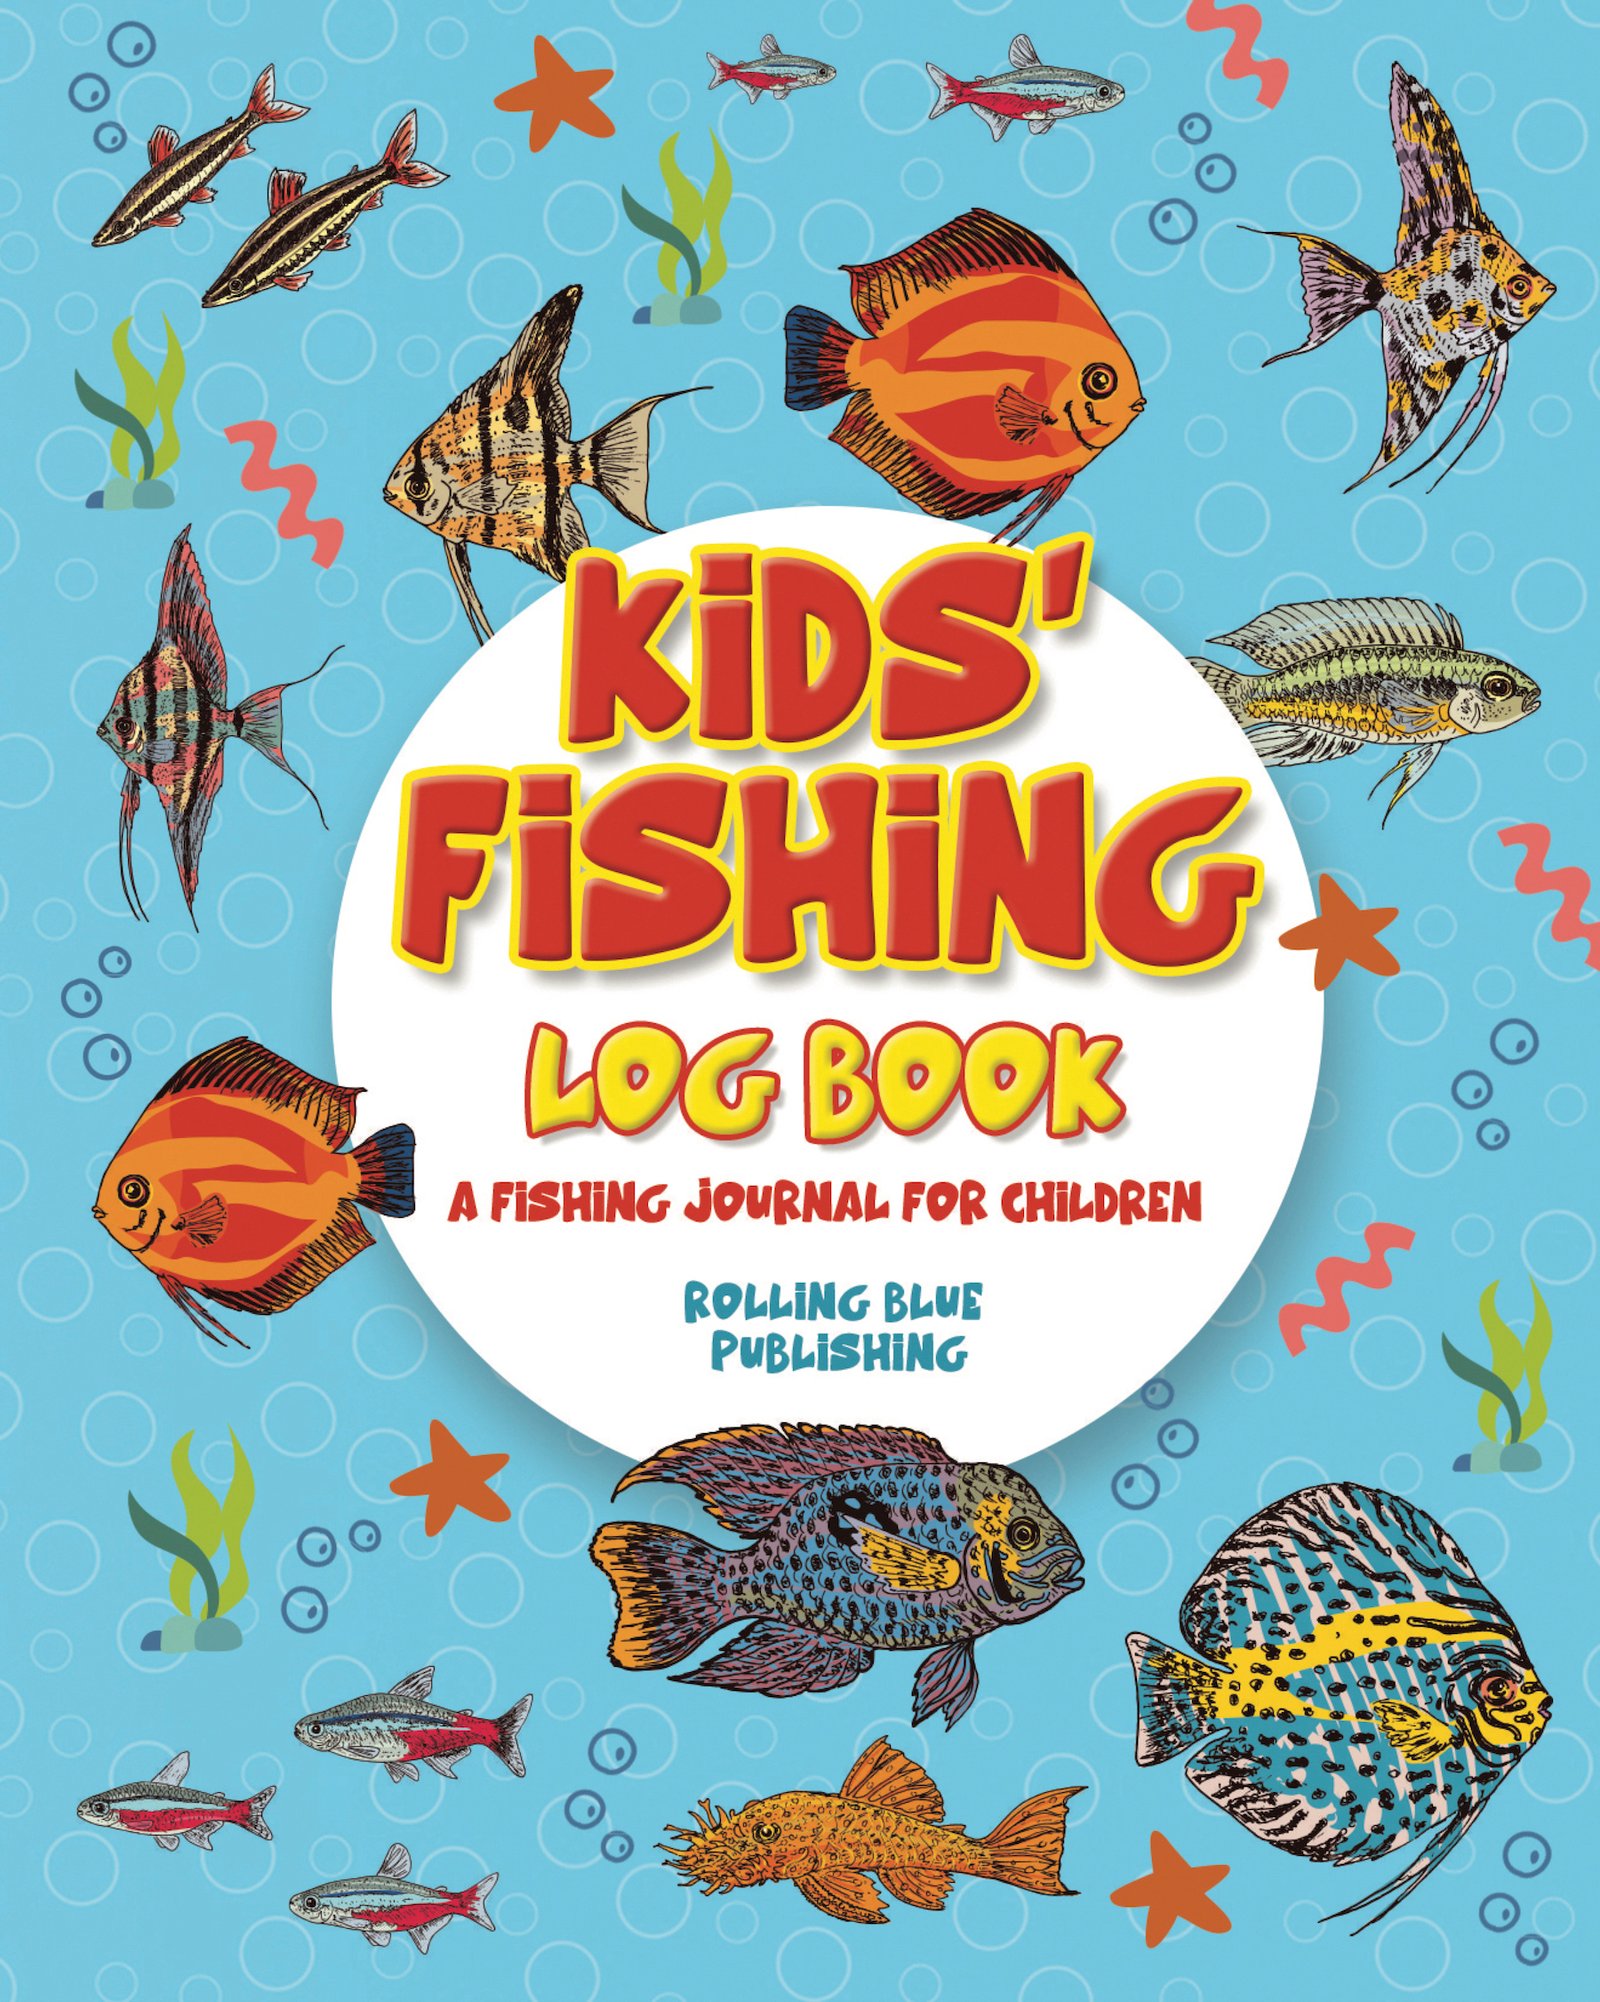 https://rollingbluepublishing.com/wp-content/uploads/2020/12/fishing-log-book-cover-copy.jpg